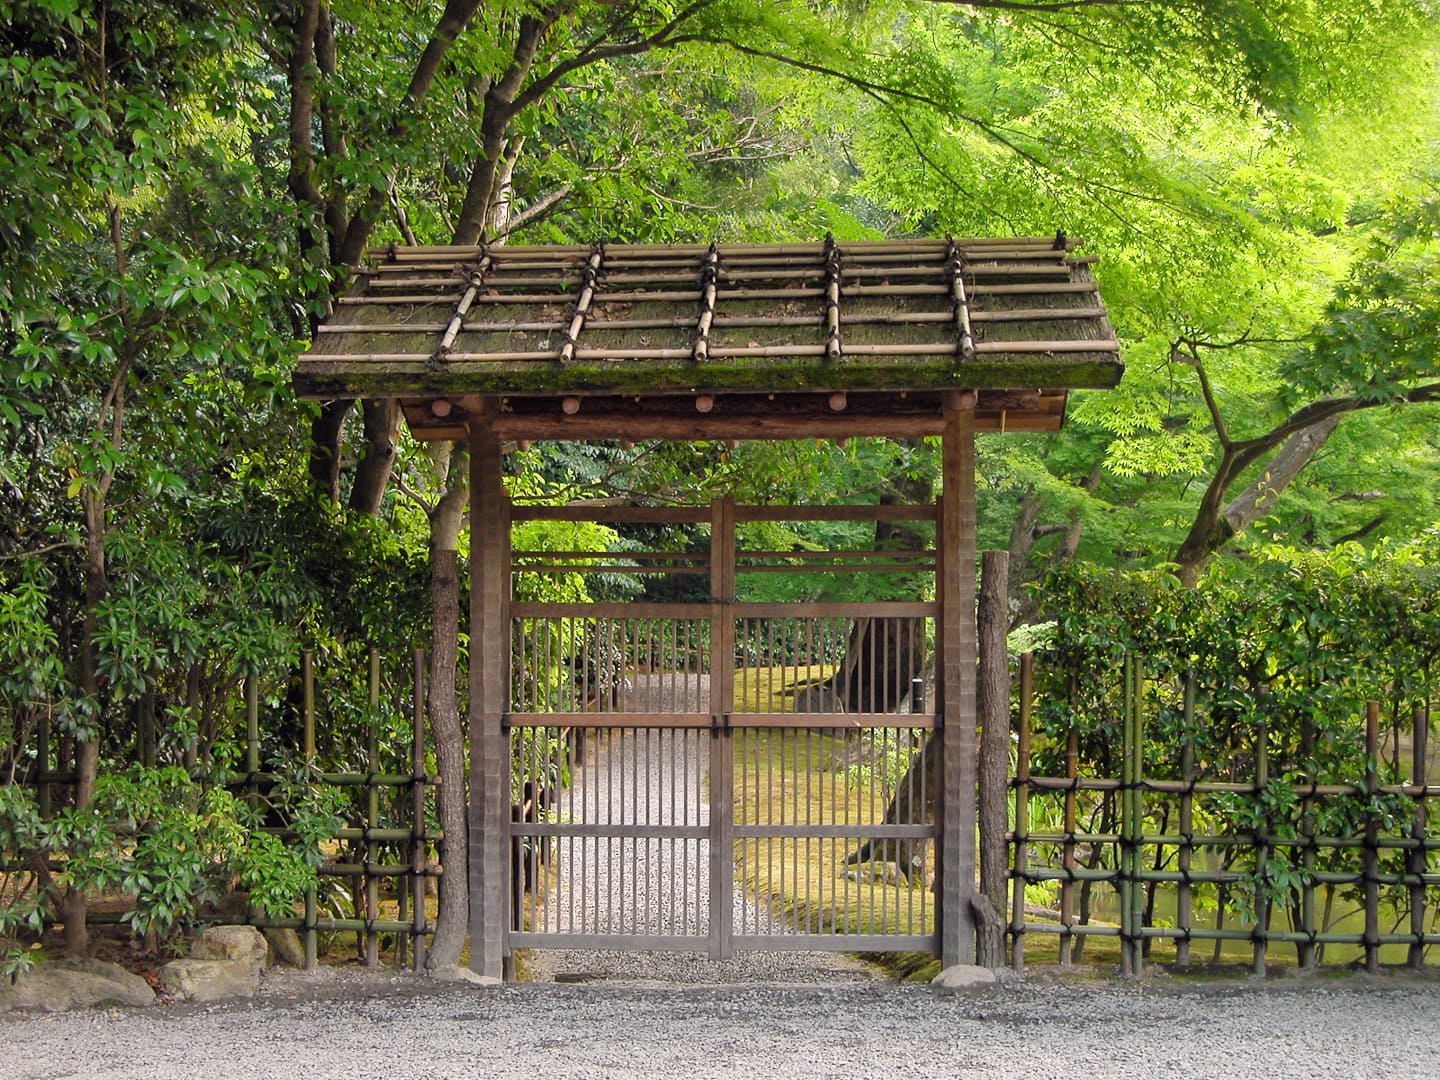 A wooden gate leading into a garden.